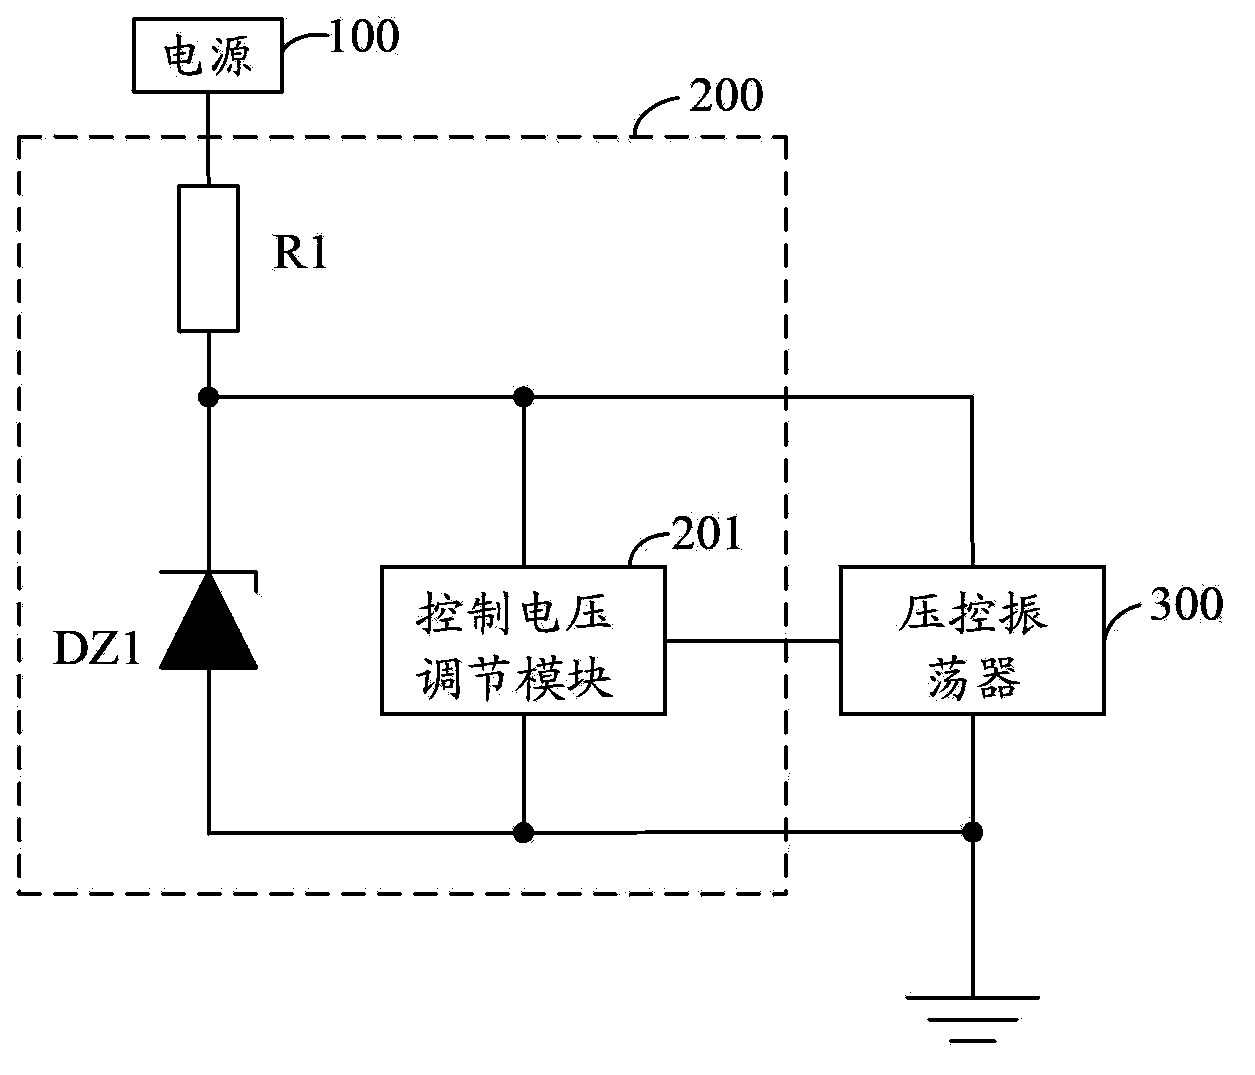 Voltage-controlled oscillator voltage compensation circuit